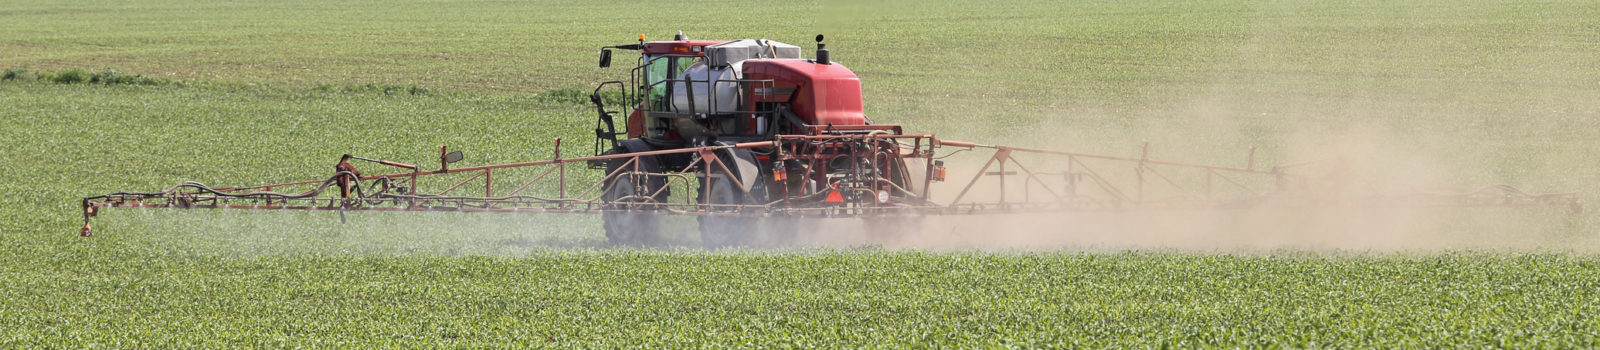 Spraying herbicide onto a farm field of corn